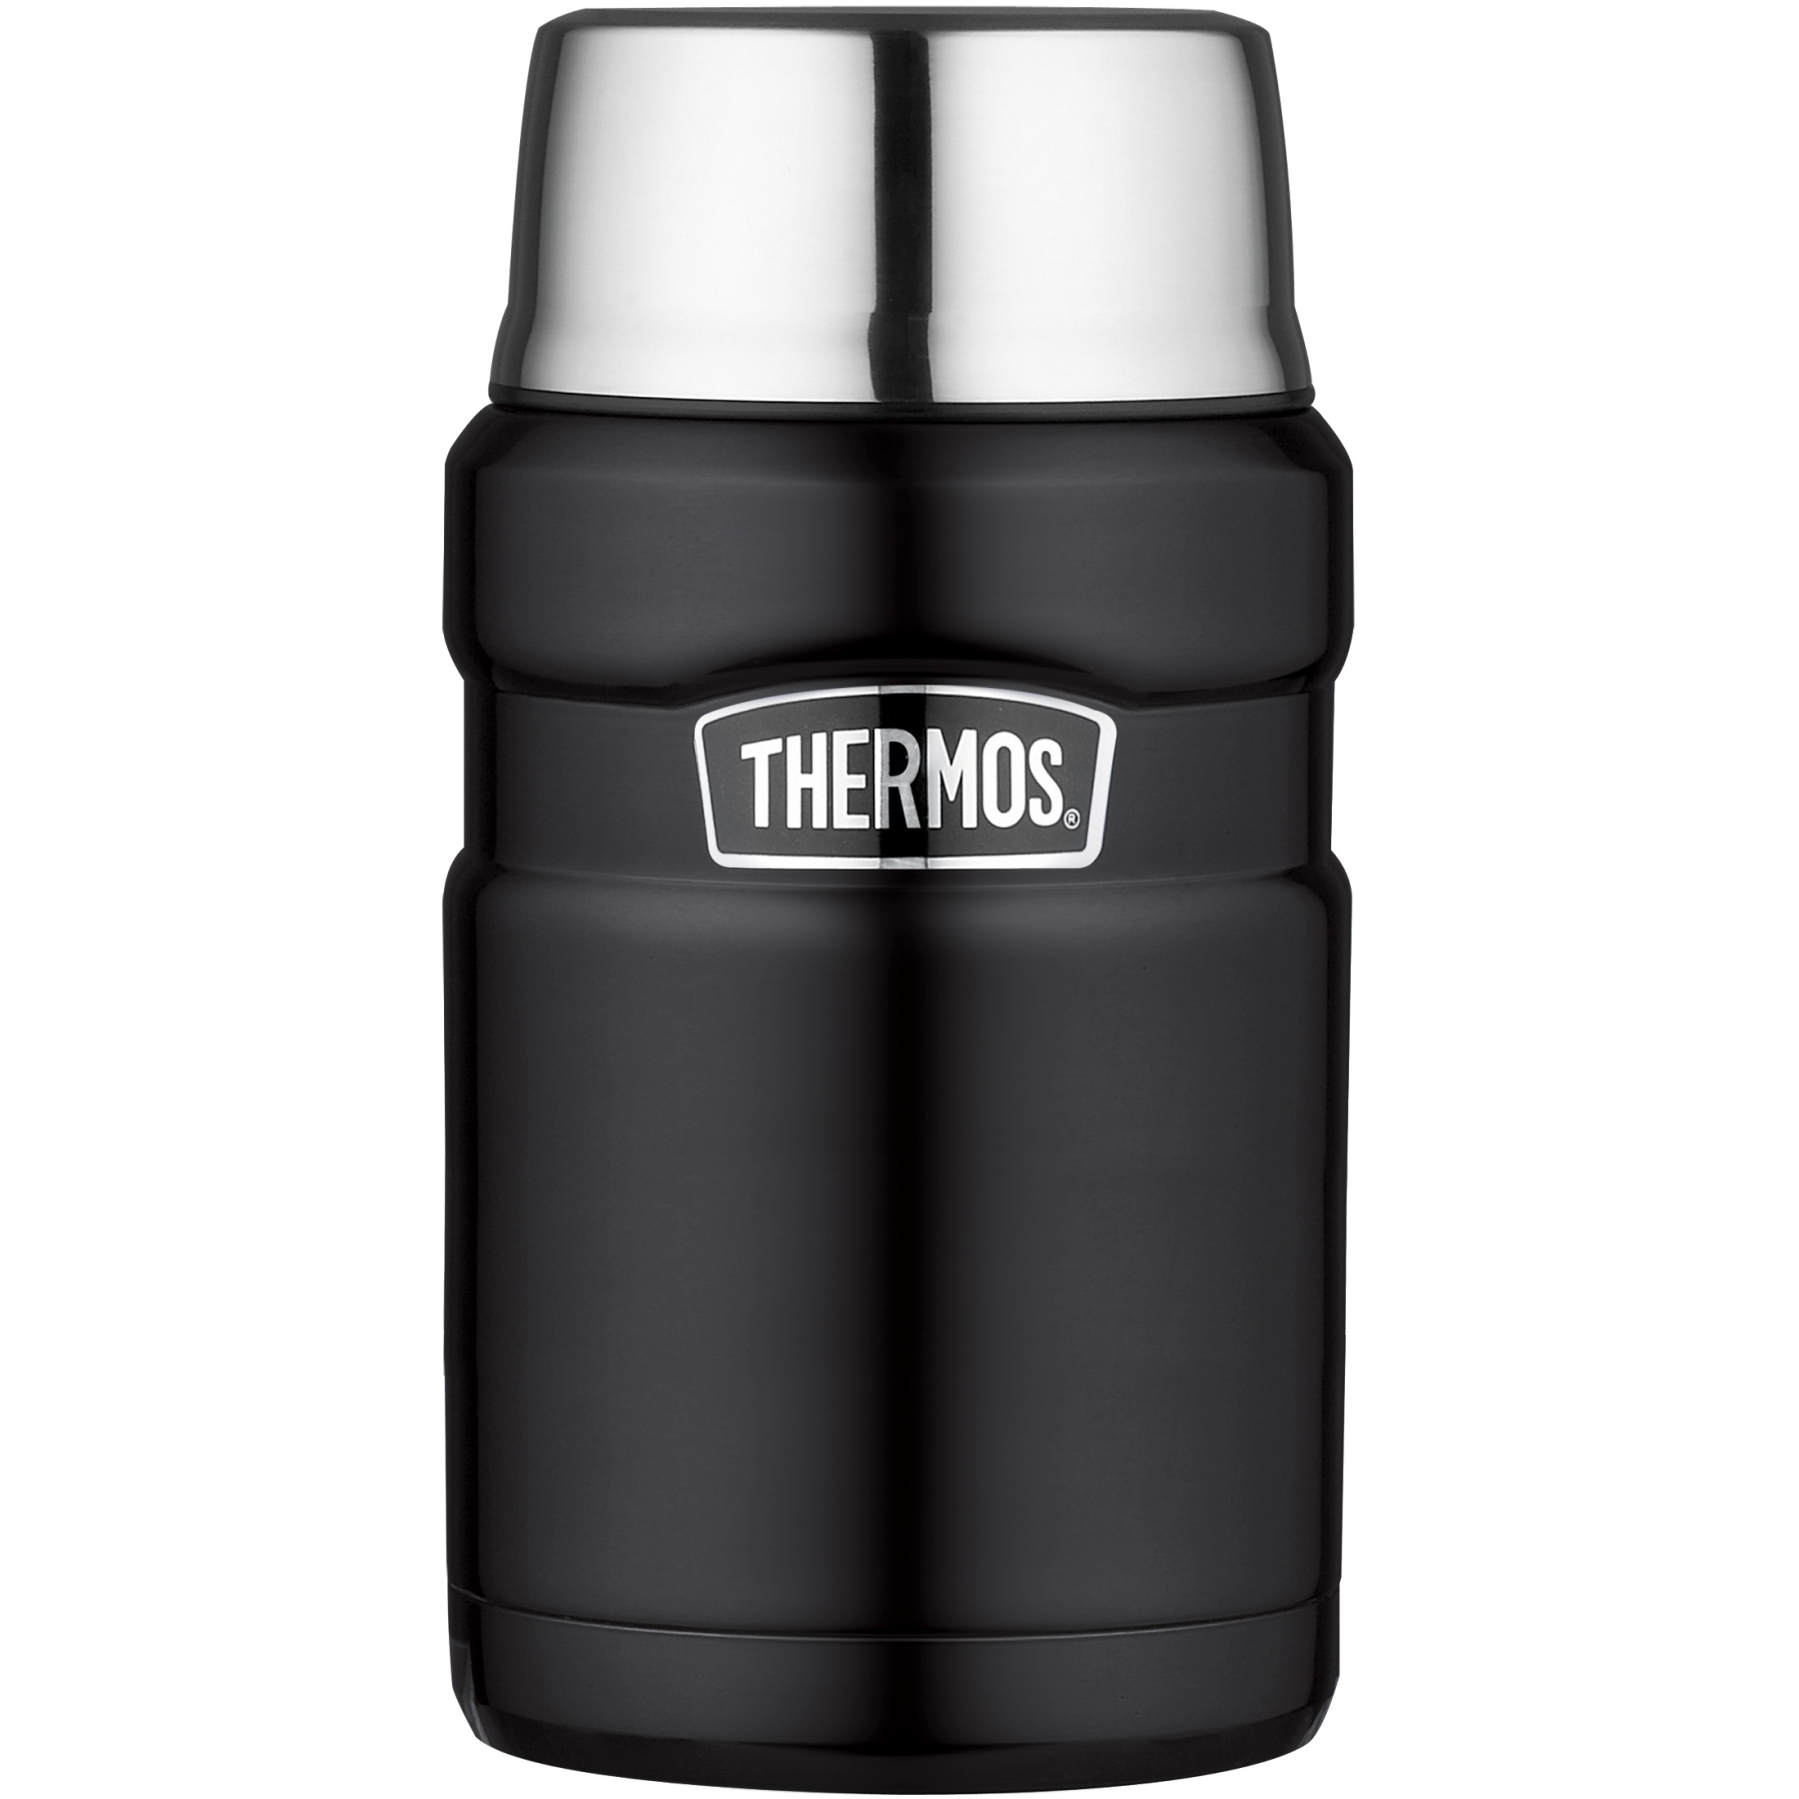 Produktbild von THERMOS® Stainless King Food Jar 0.71L Isolier-Speisegefäß - charcoal black mat